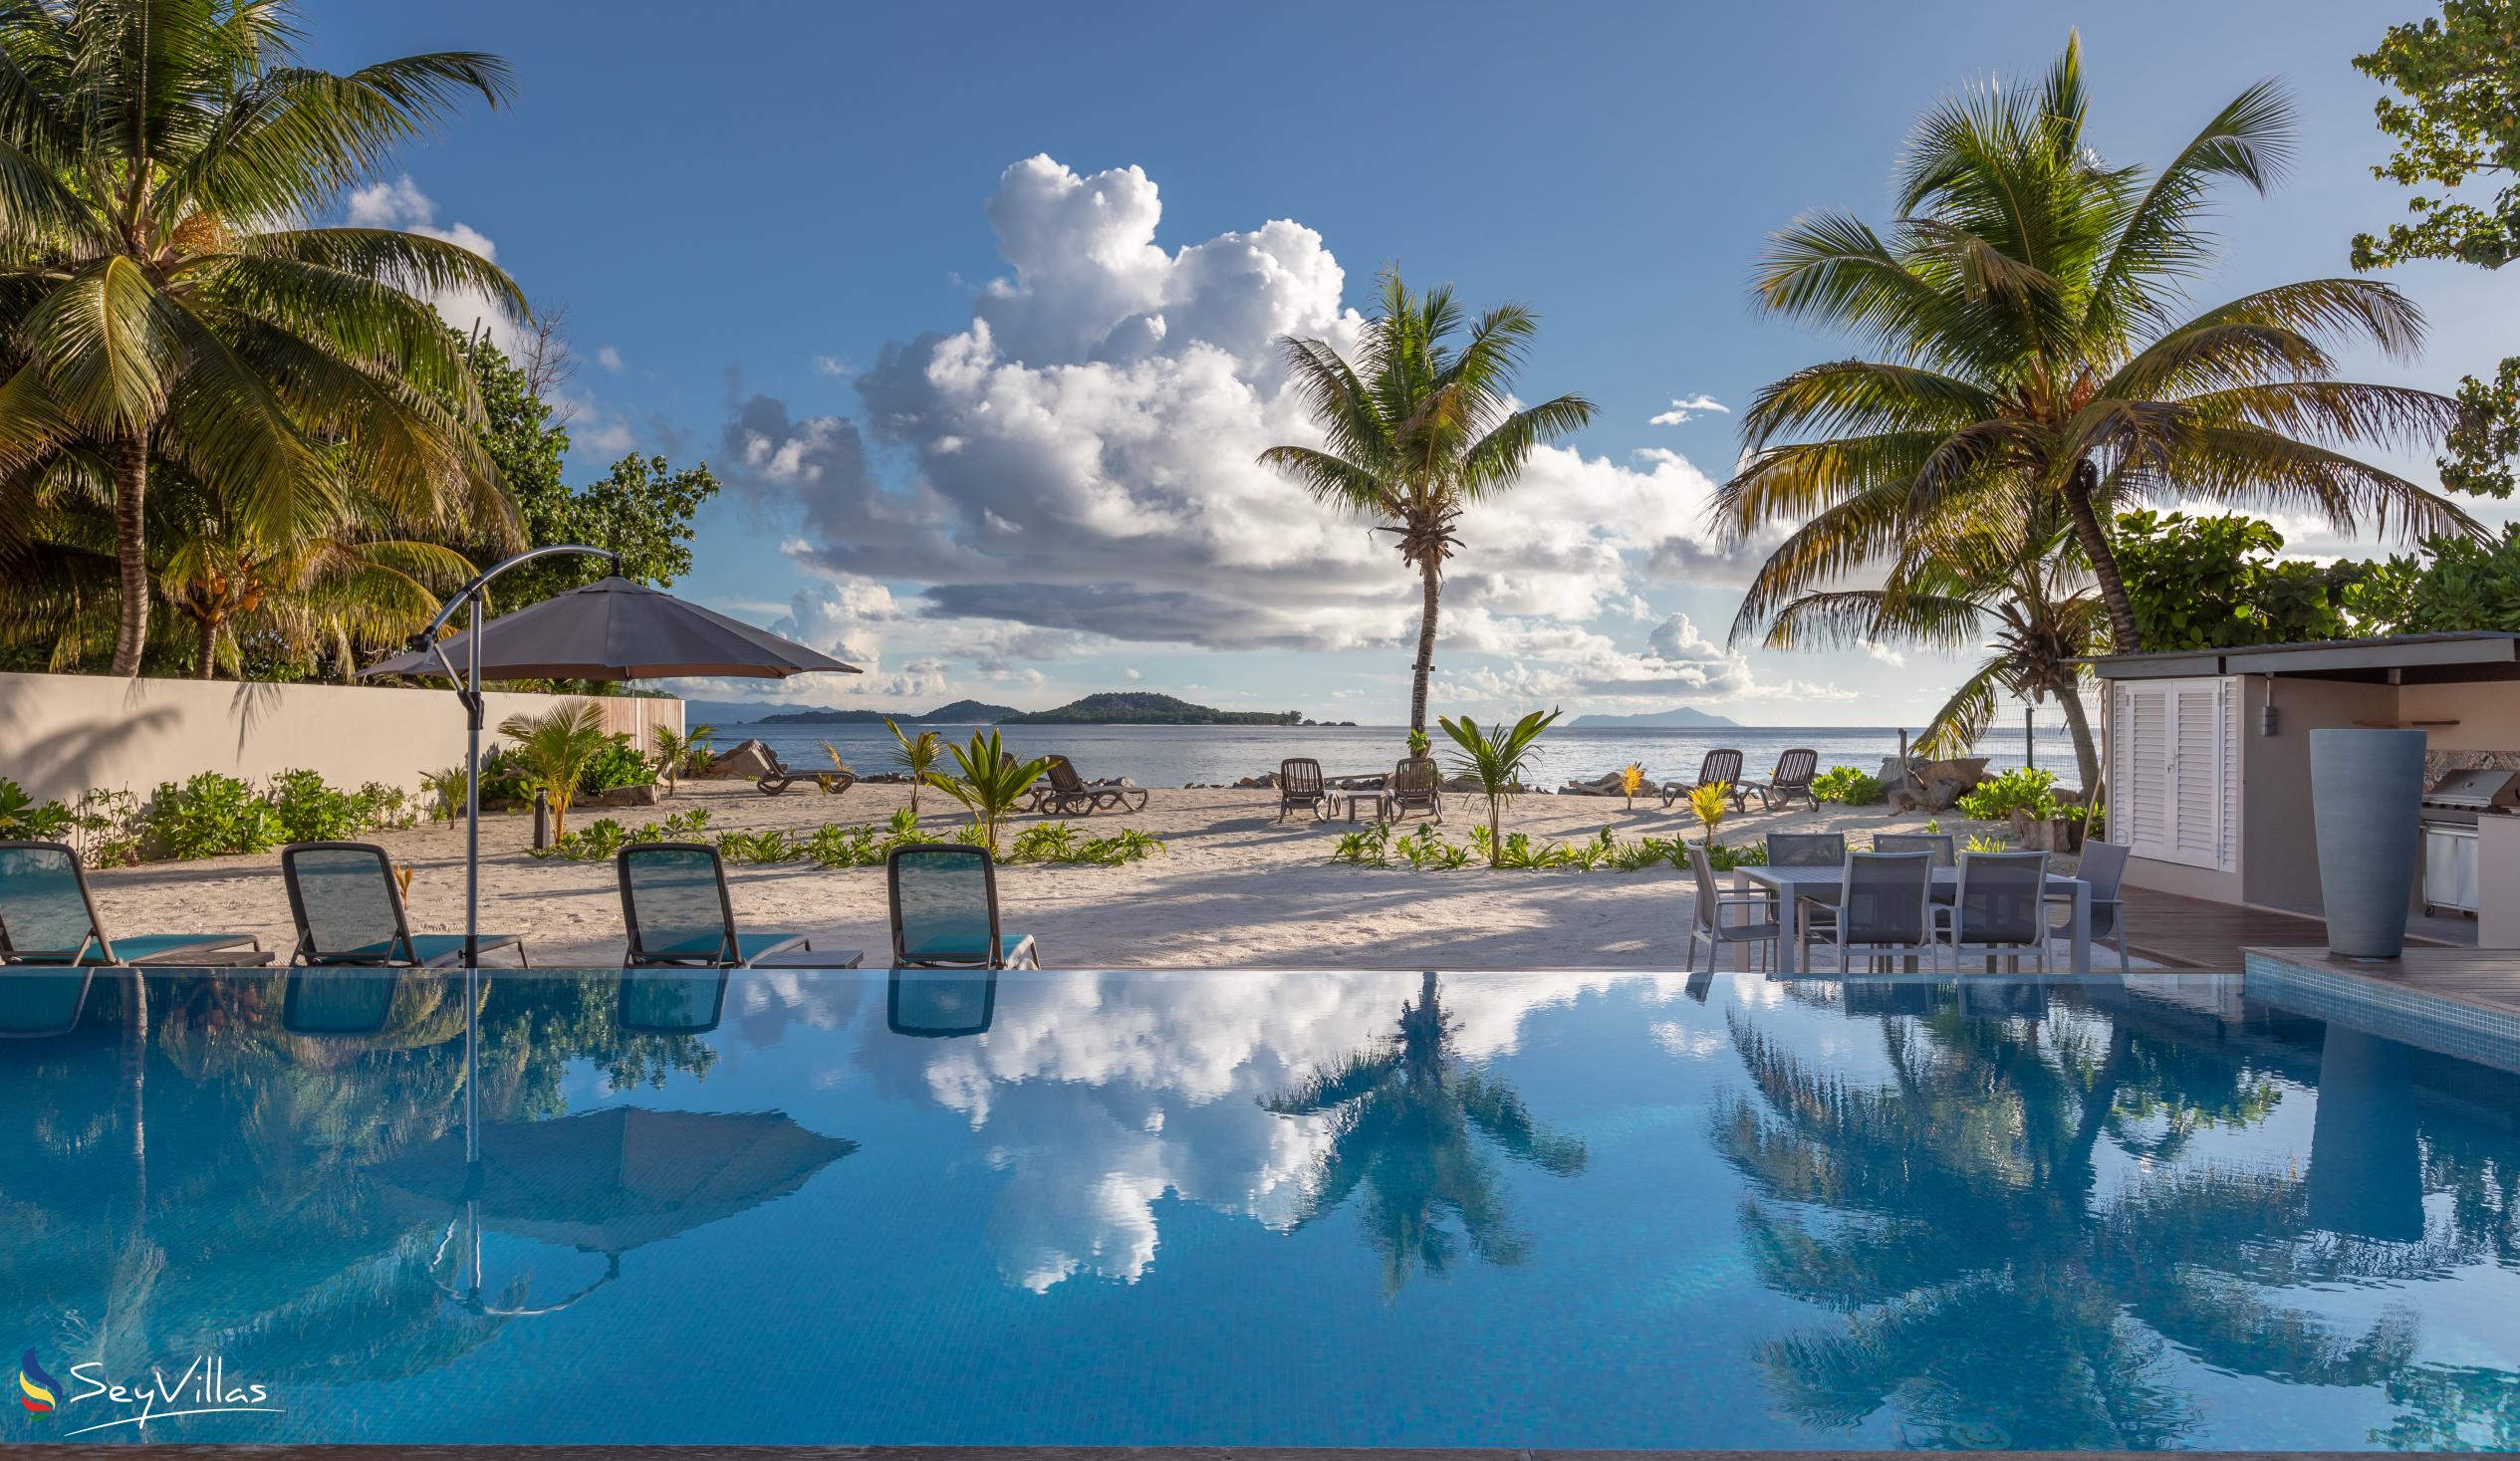 Foto 48: Villas Coco Beach - La Maison Villas Coco Beach - Praslin (Seychelles)